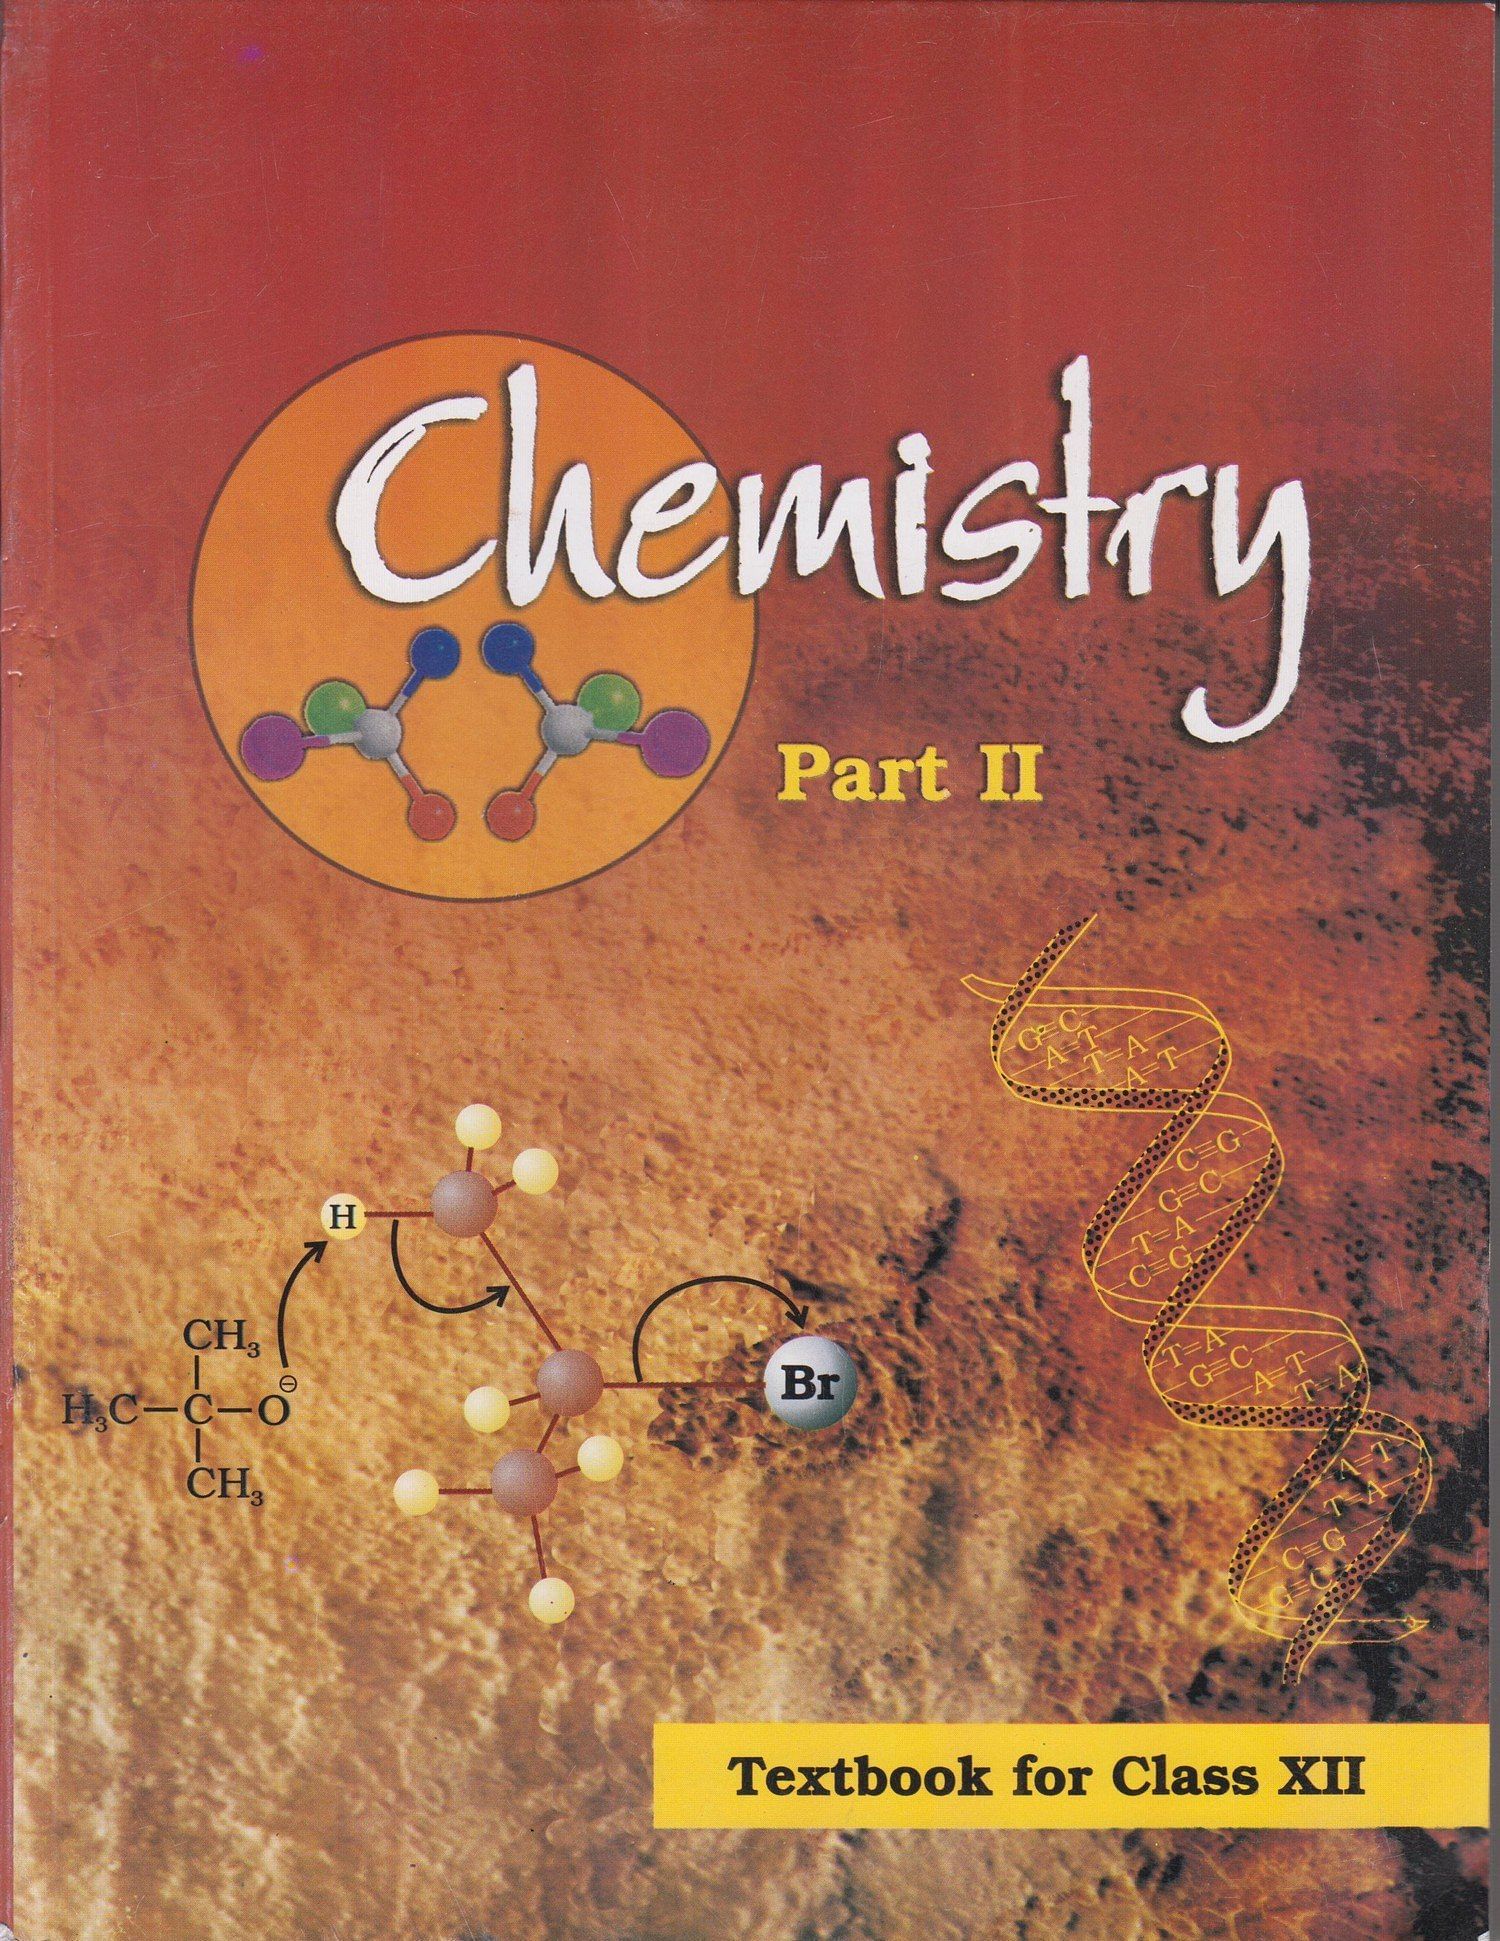 NCERT Chemistry Book 12th